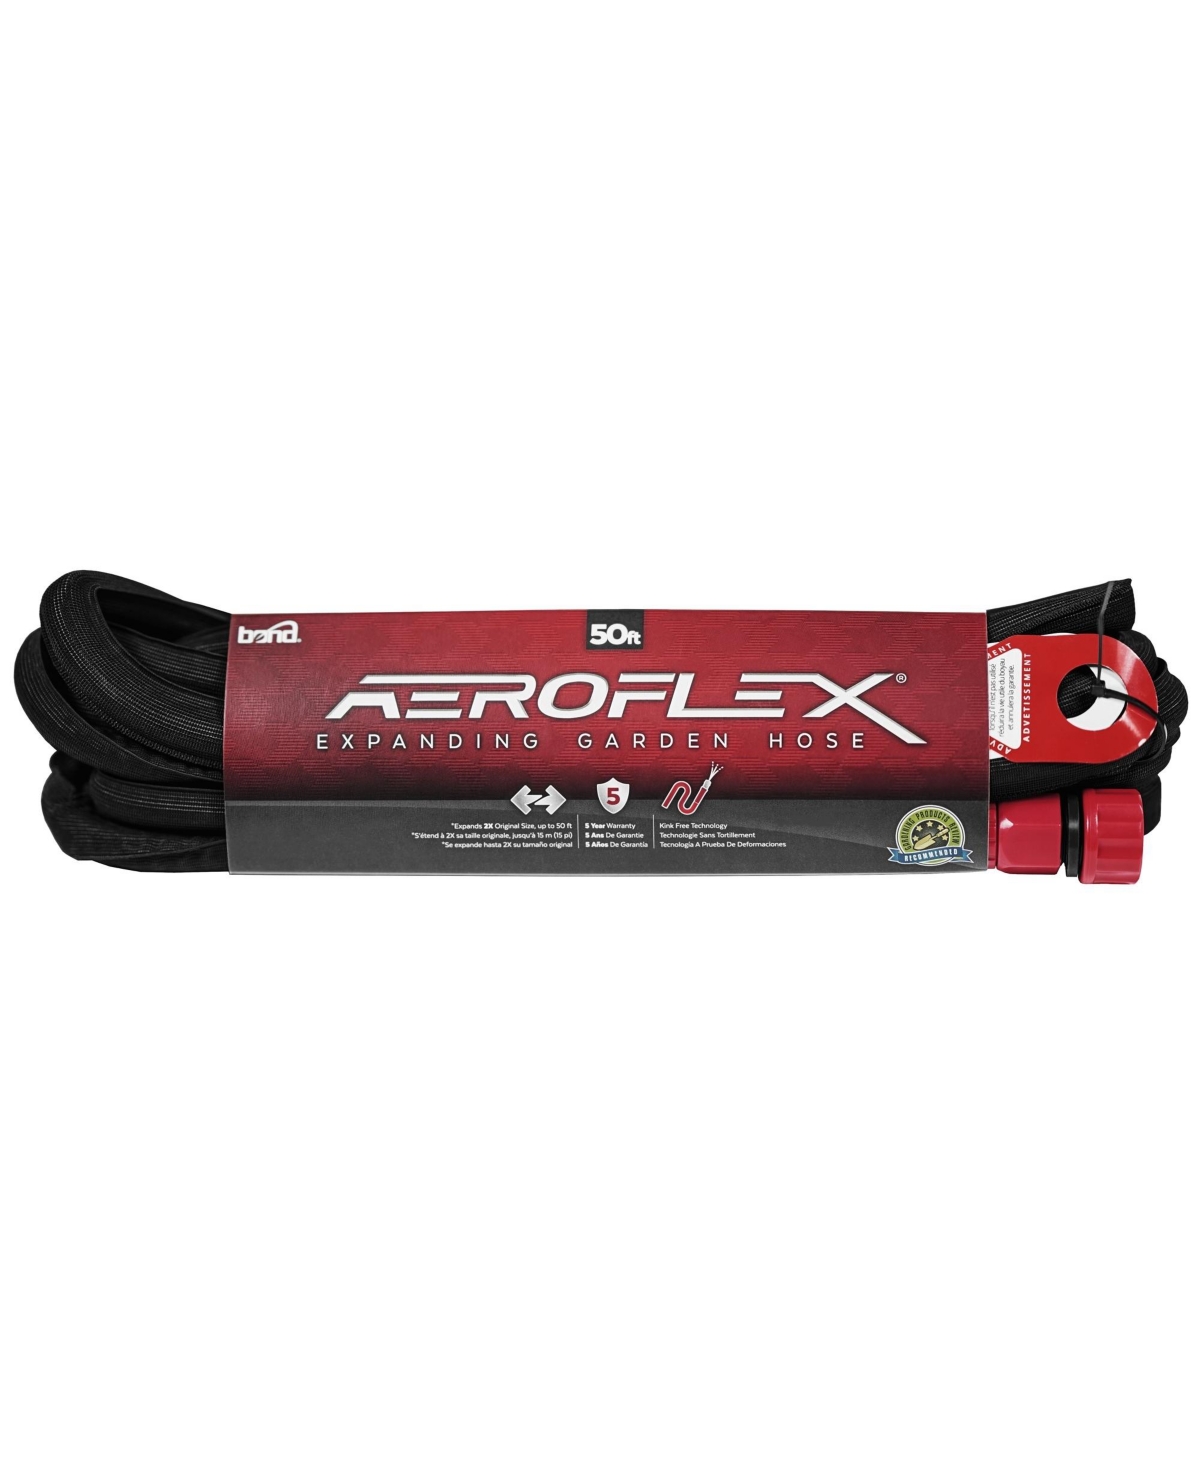 Manufacturing 989865 Aeroflex Stretch Hose- 50 feet - Black